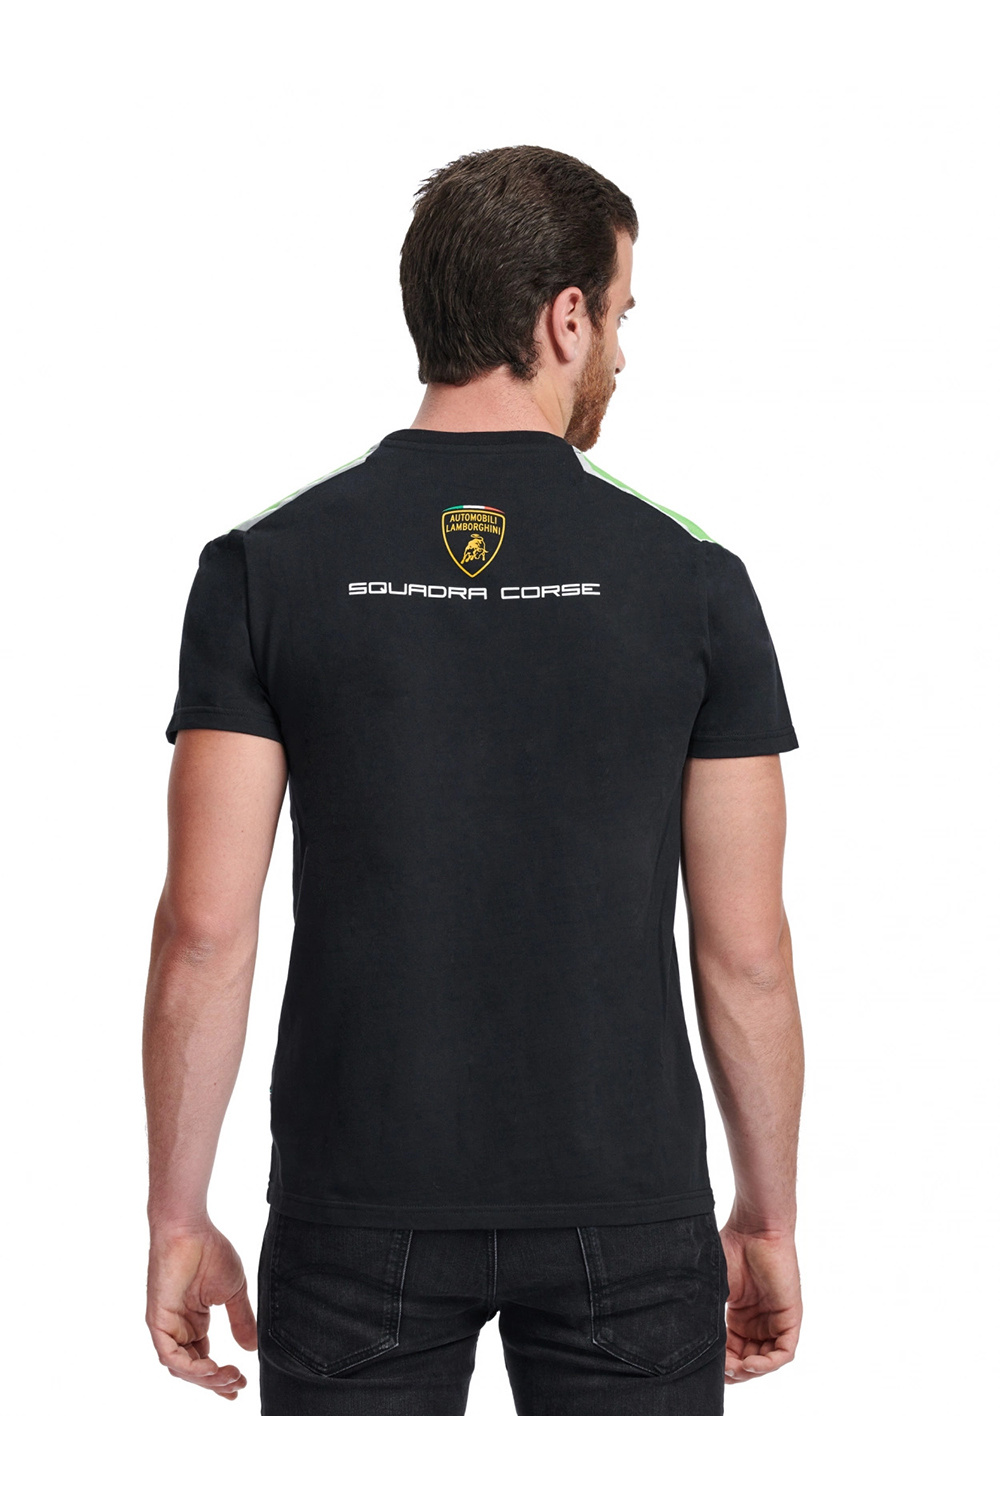 2020 Lamborghini Squadra Corse Mens Team T-Shirt Black Official Merchandise 